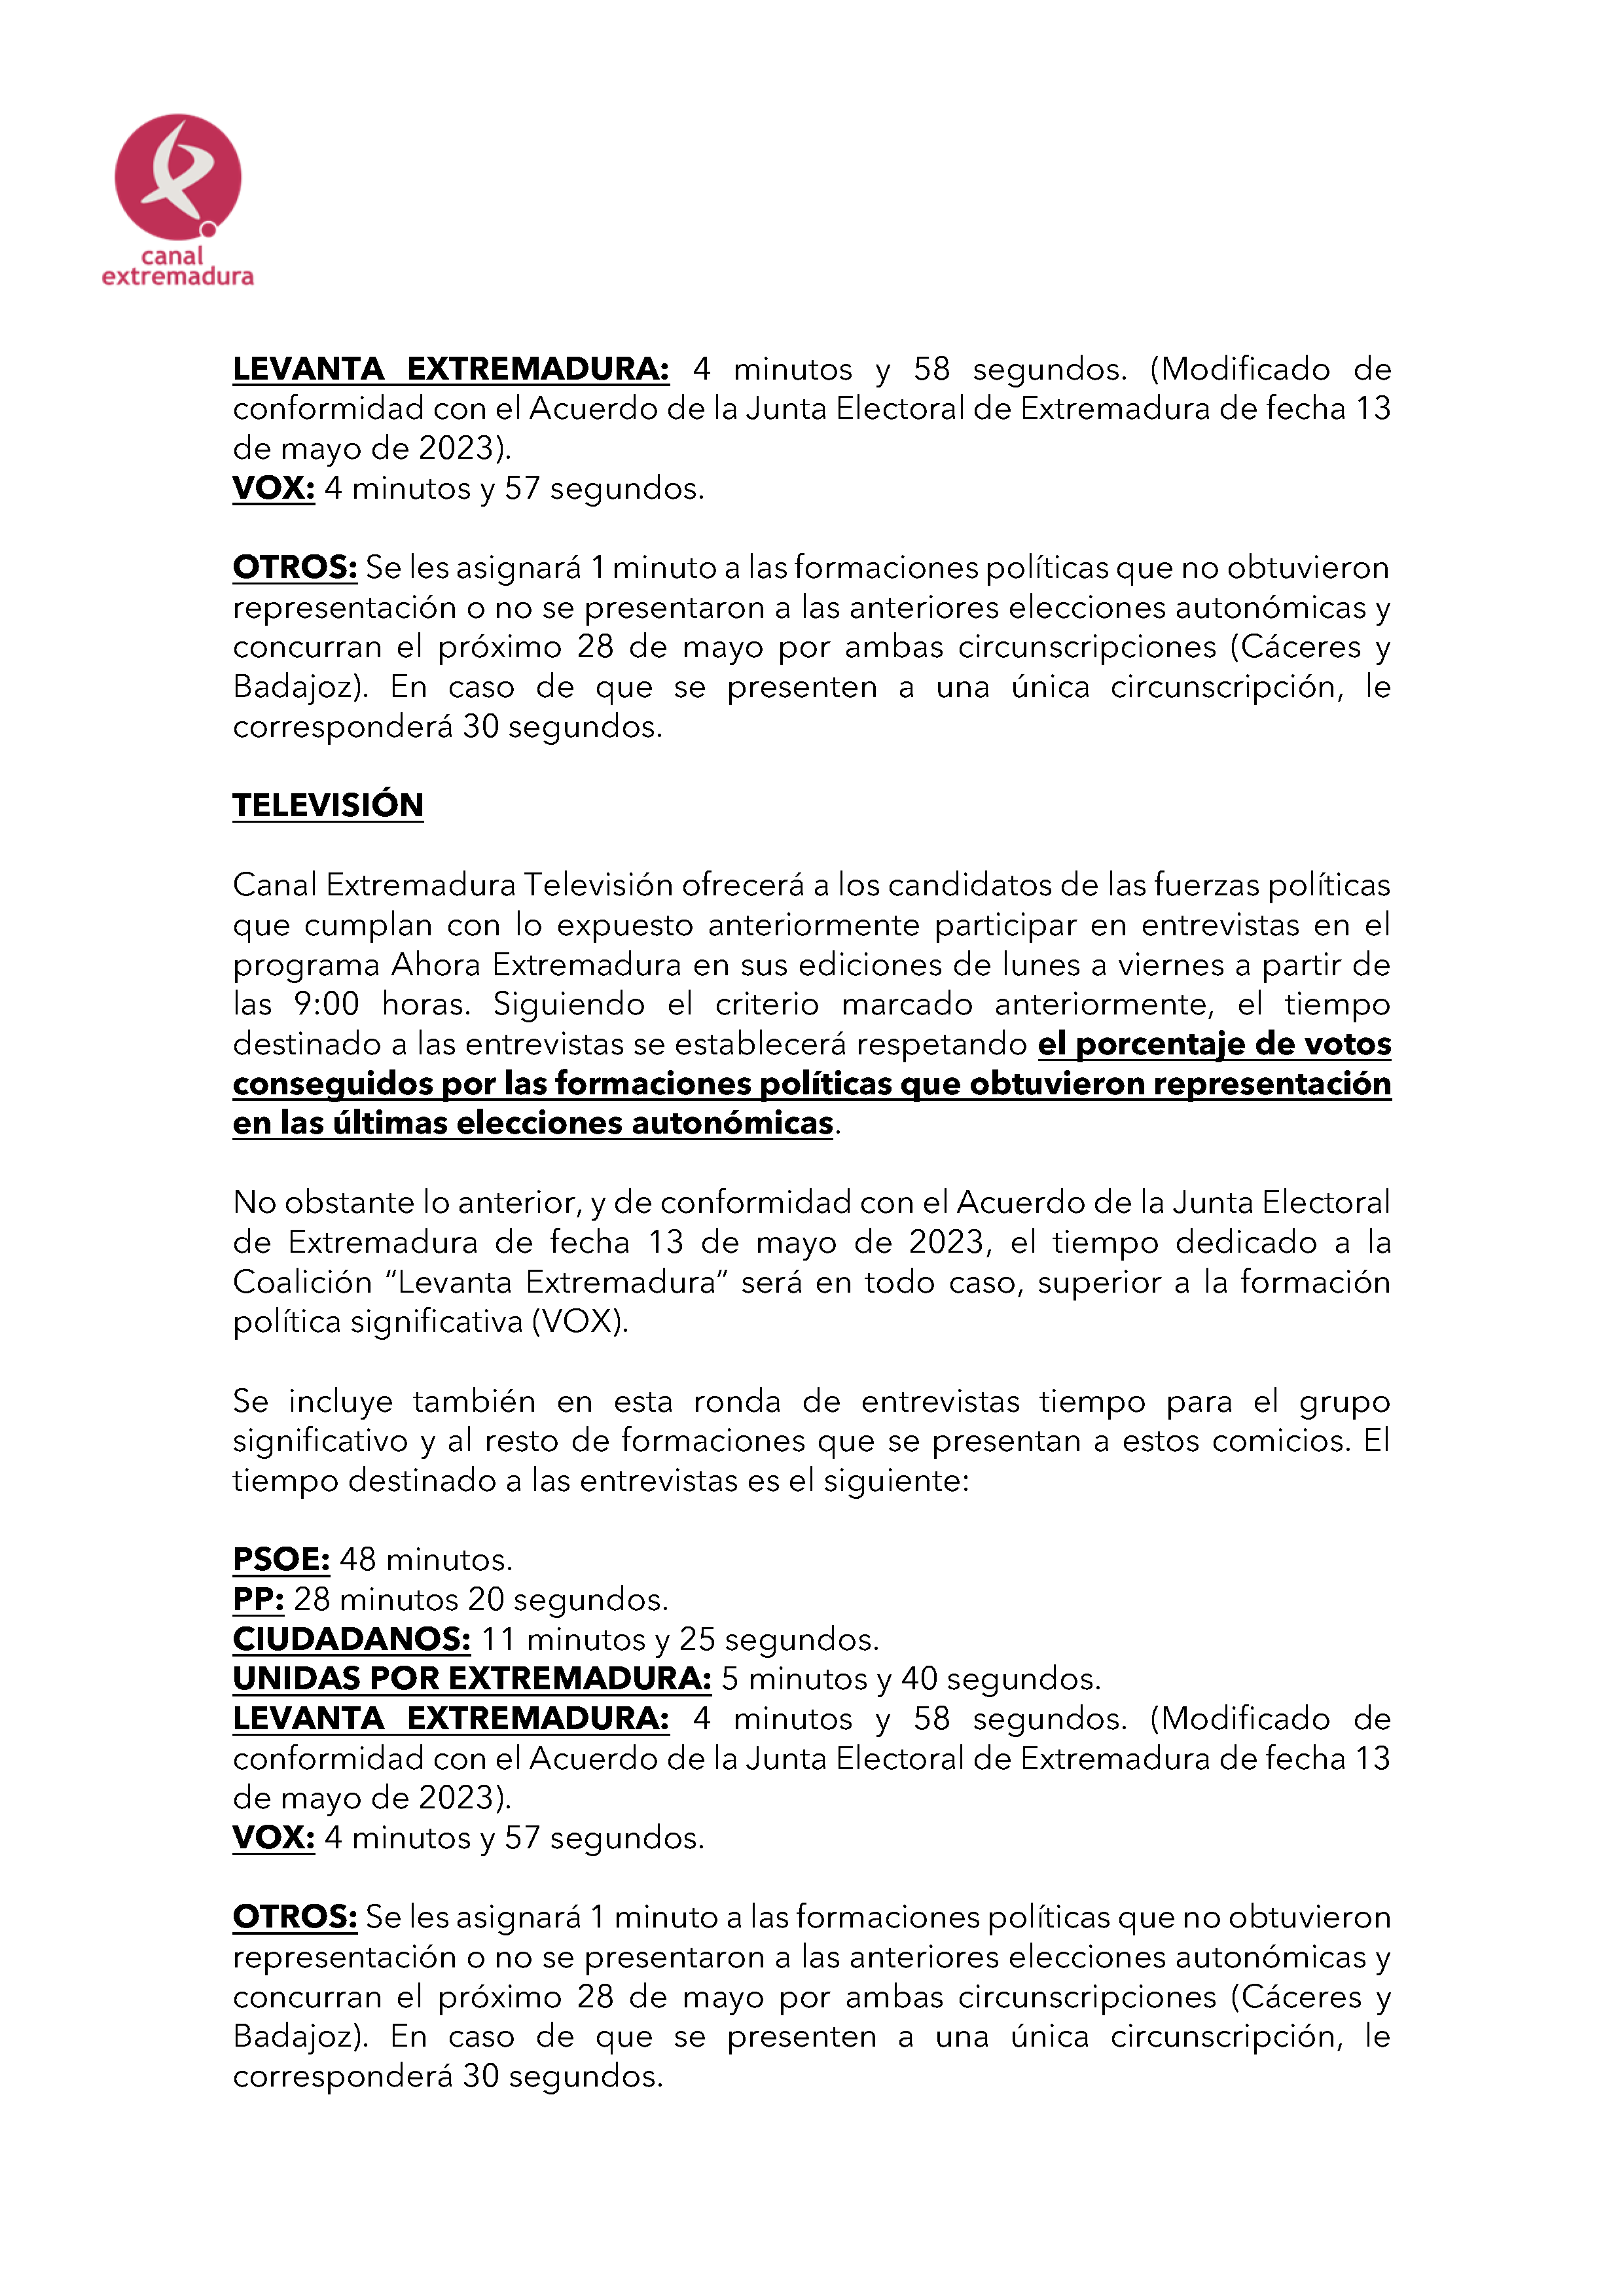 PLAN DE COBERTURA INFORMATIVA DE CANAL EXTREMADURA ELECCIONES AUTONÃ“MICAS 2023. Pag 7